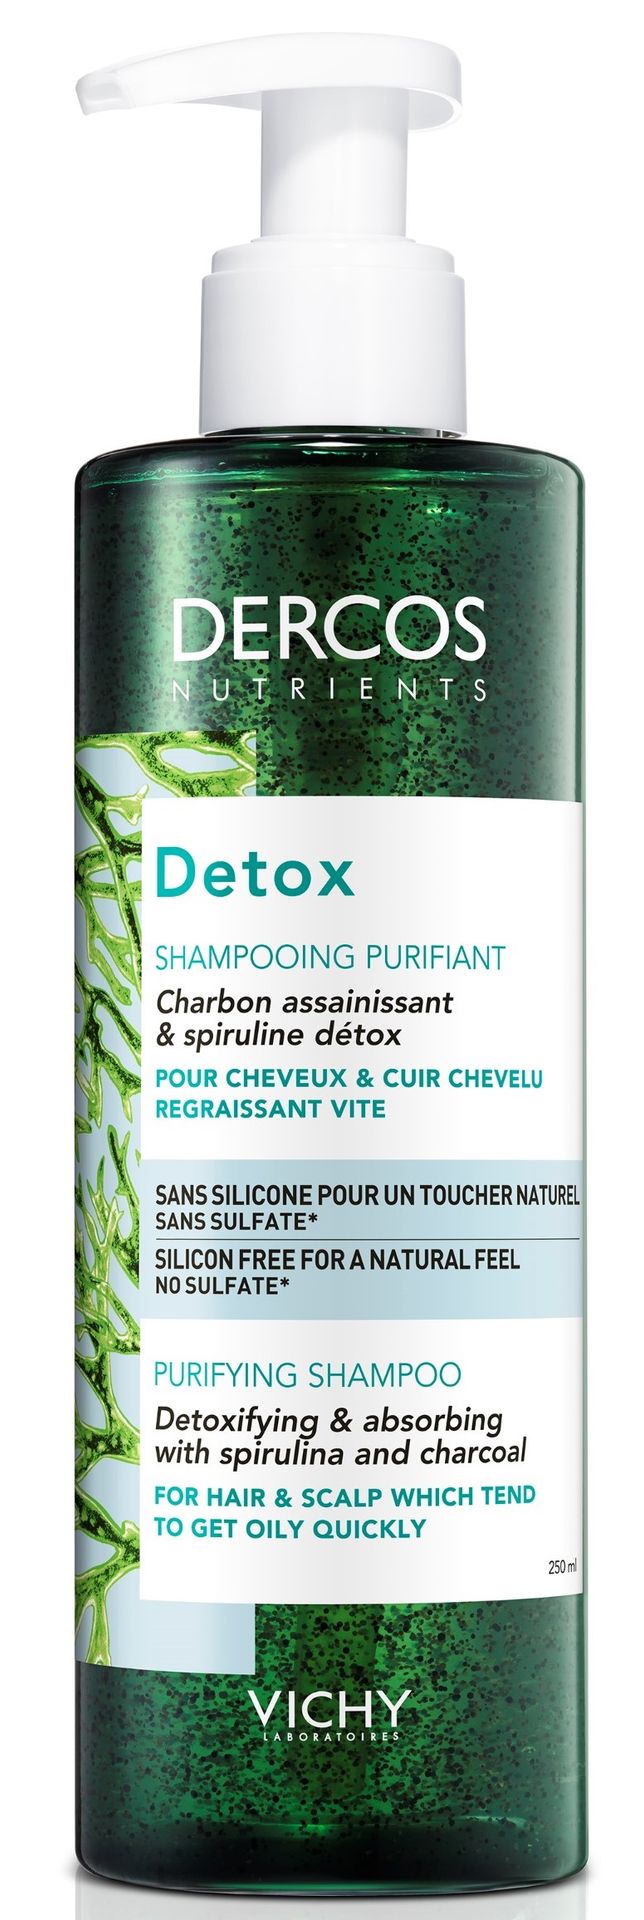 Vichy Dercos Detox 250 ml